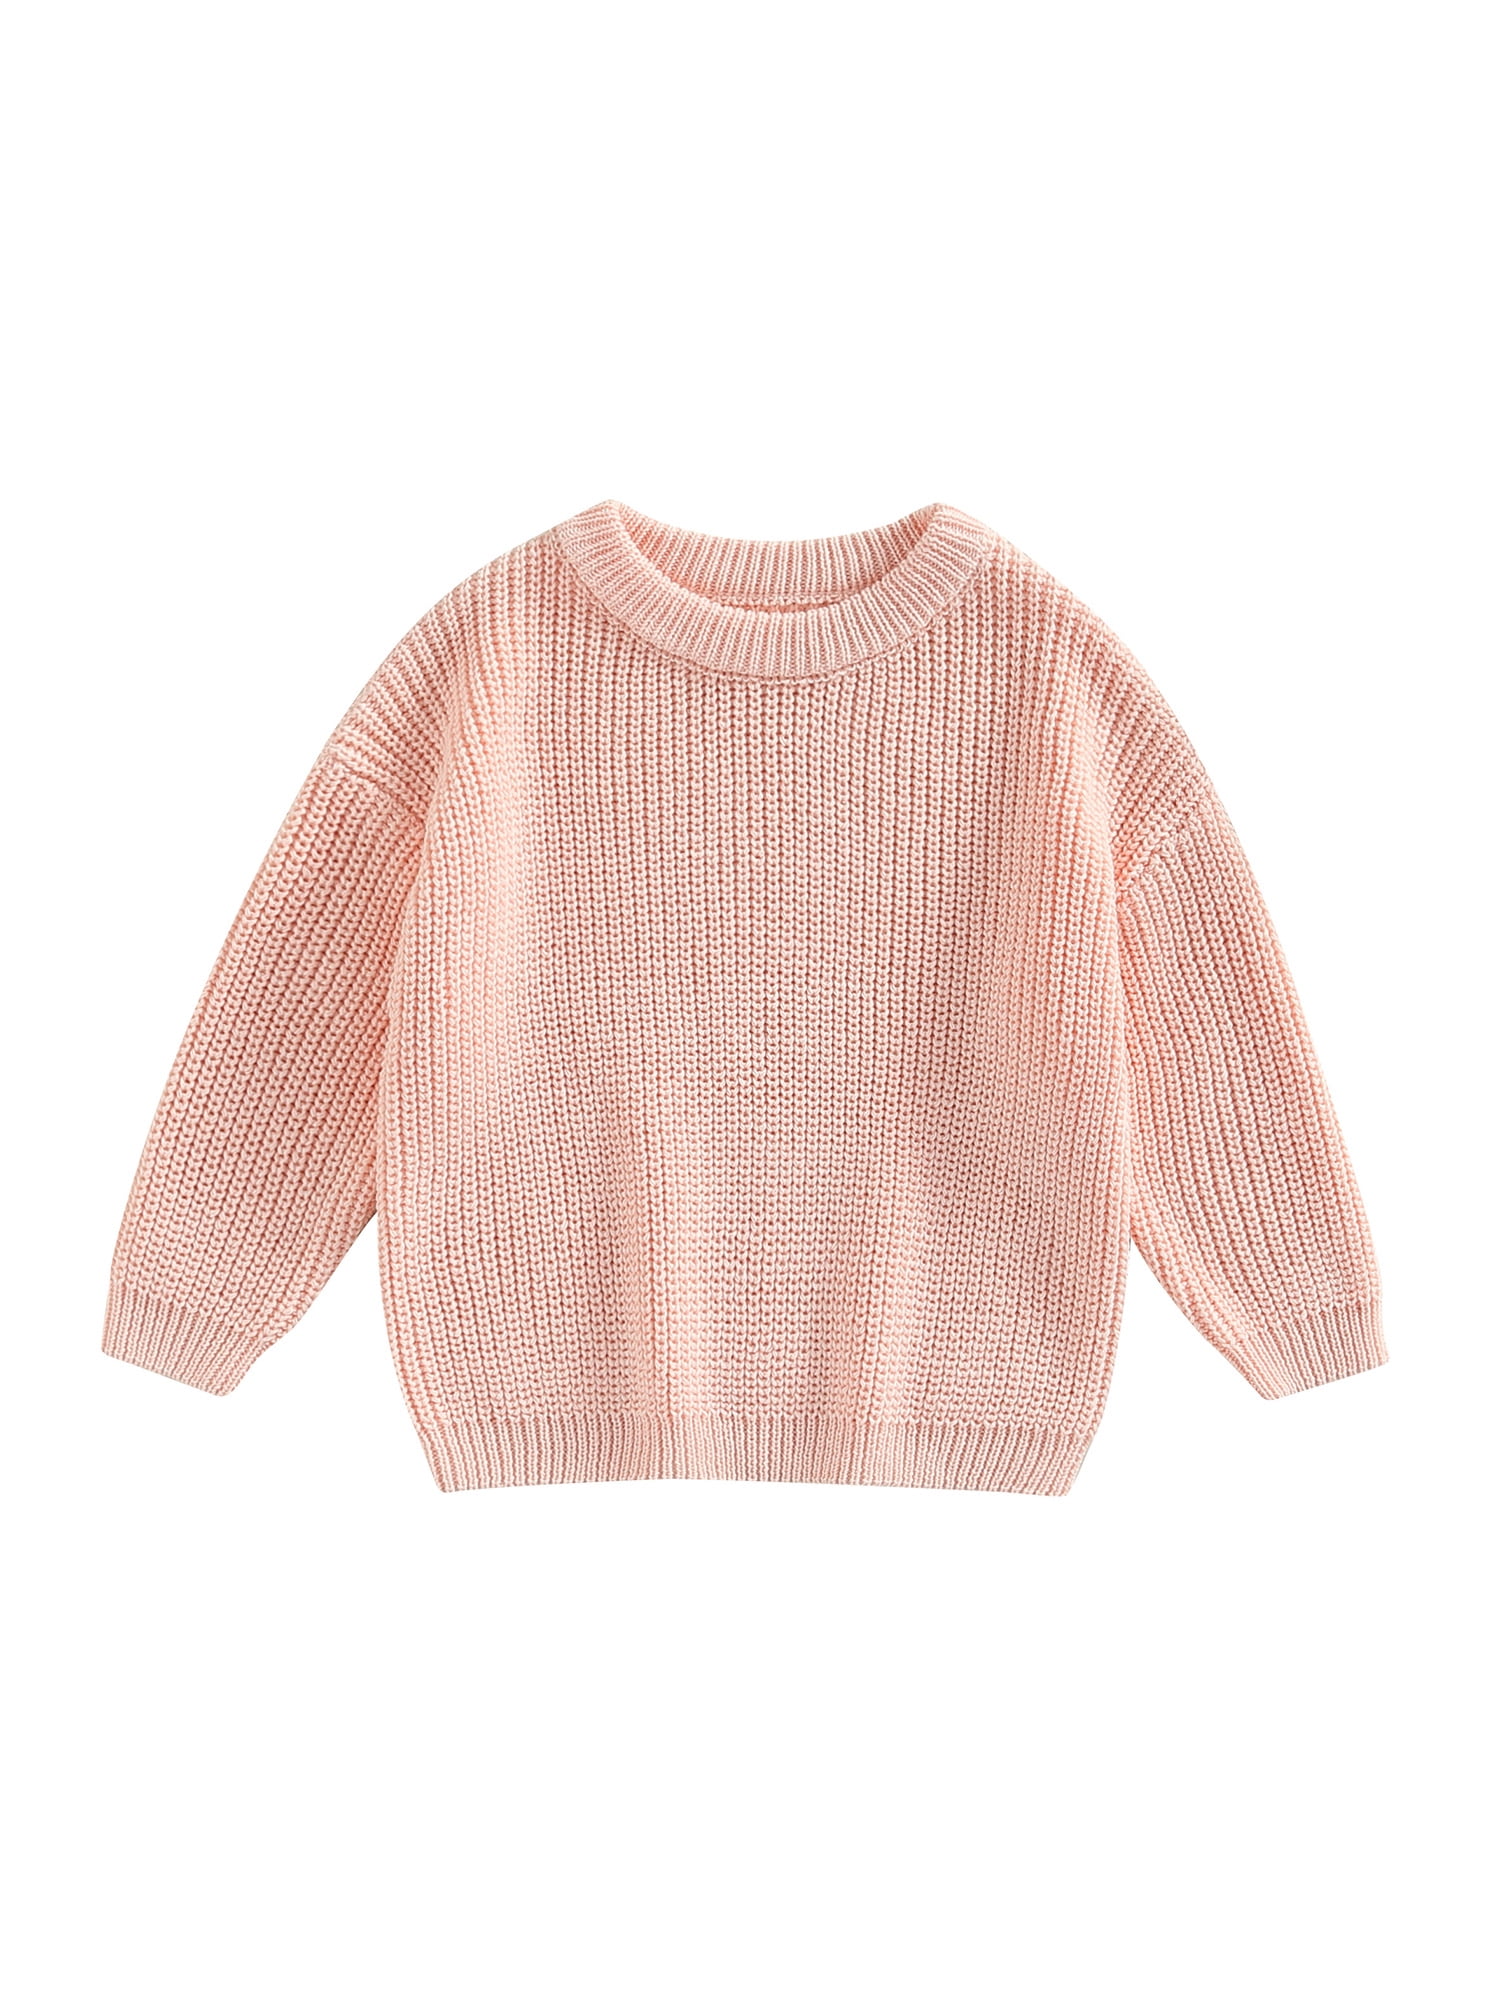 Ayalinggo Toddler Baby Girl Boy Knitted Sweater Long Sleeve Crewneck Pullover Sweatshirt Fall Winter Warm Tops Blouse 